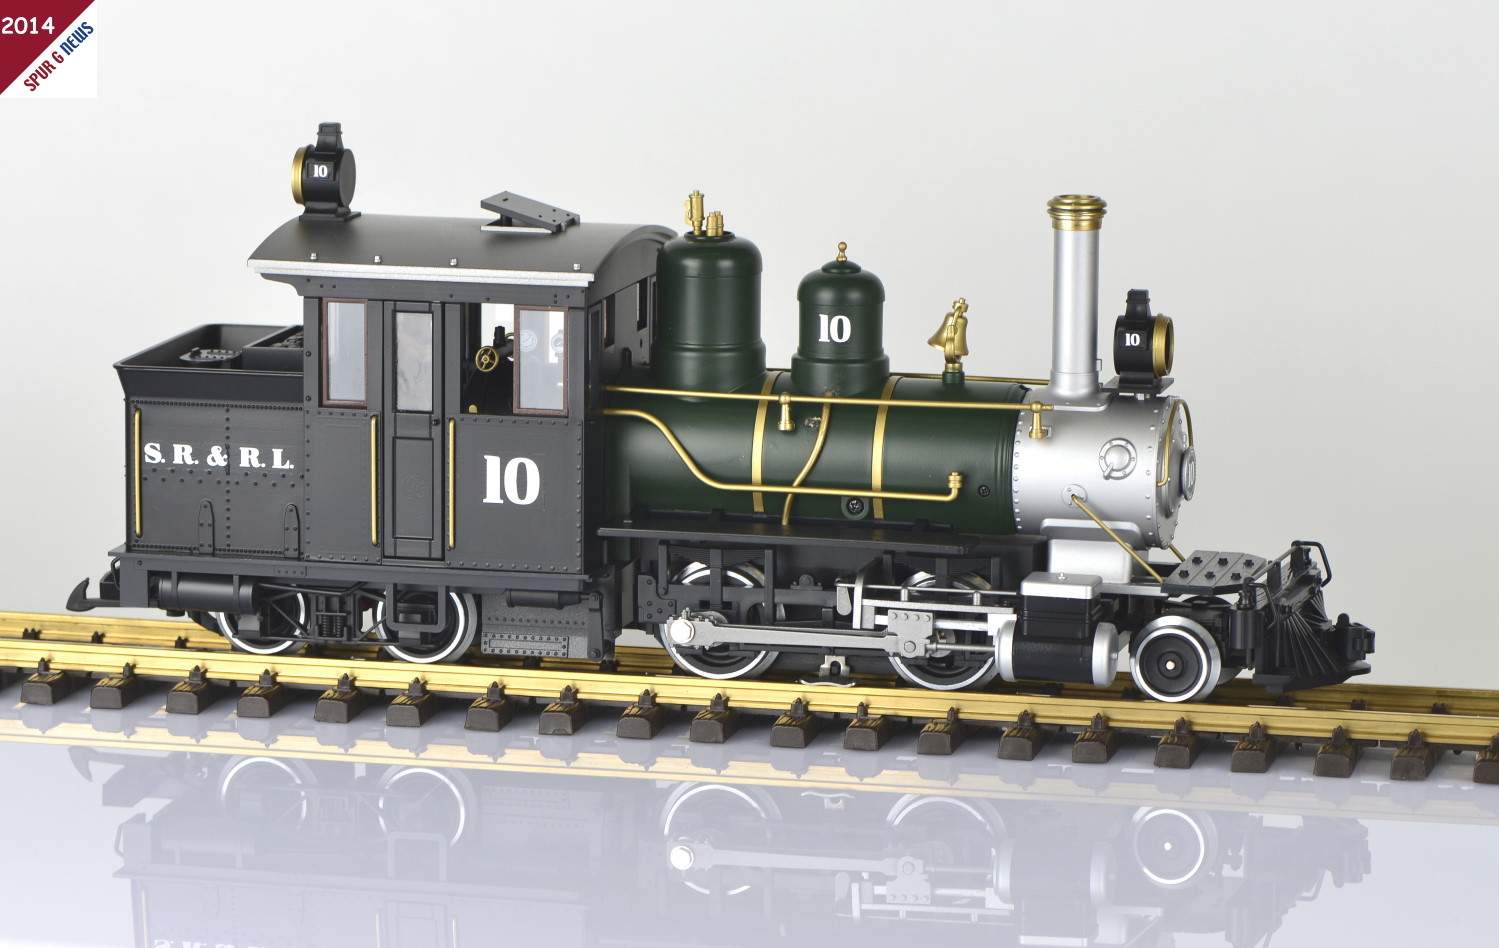 LGB Neuheit 2014 - Forney Lokomotive Nr. 10 - Art. Nr. 27253 - S.R.&R.L.